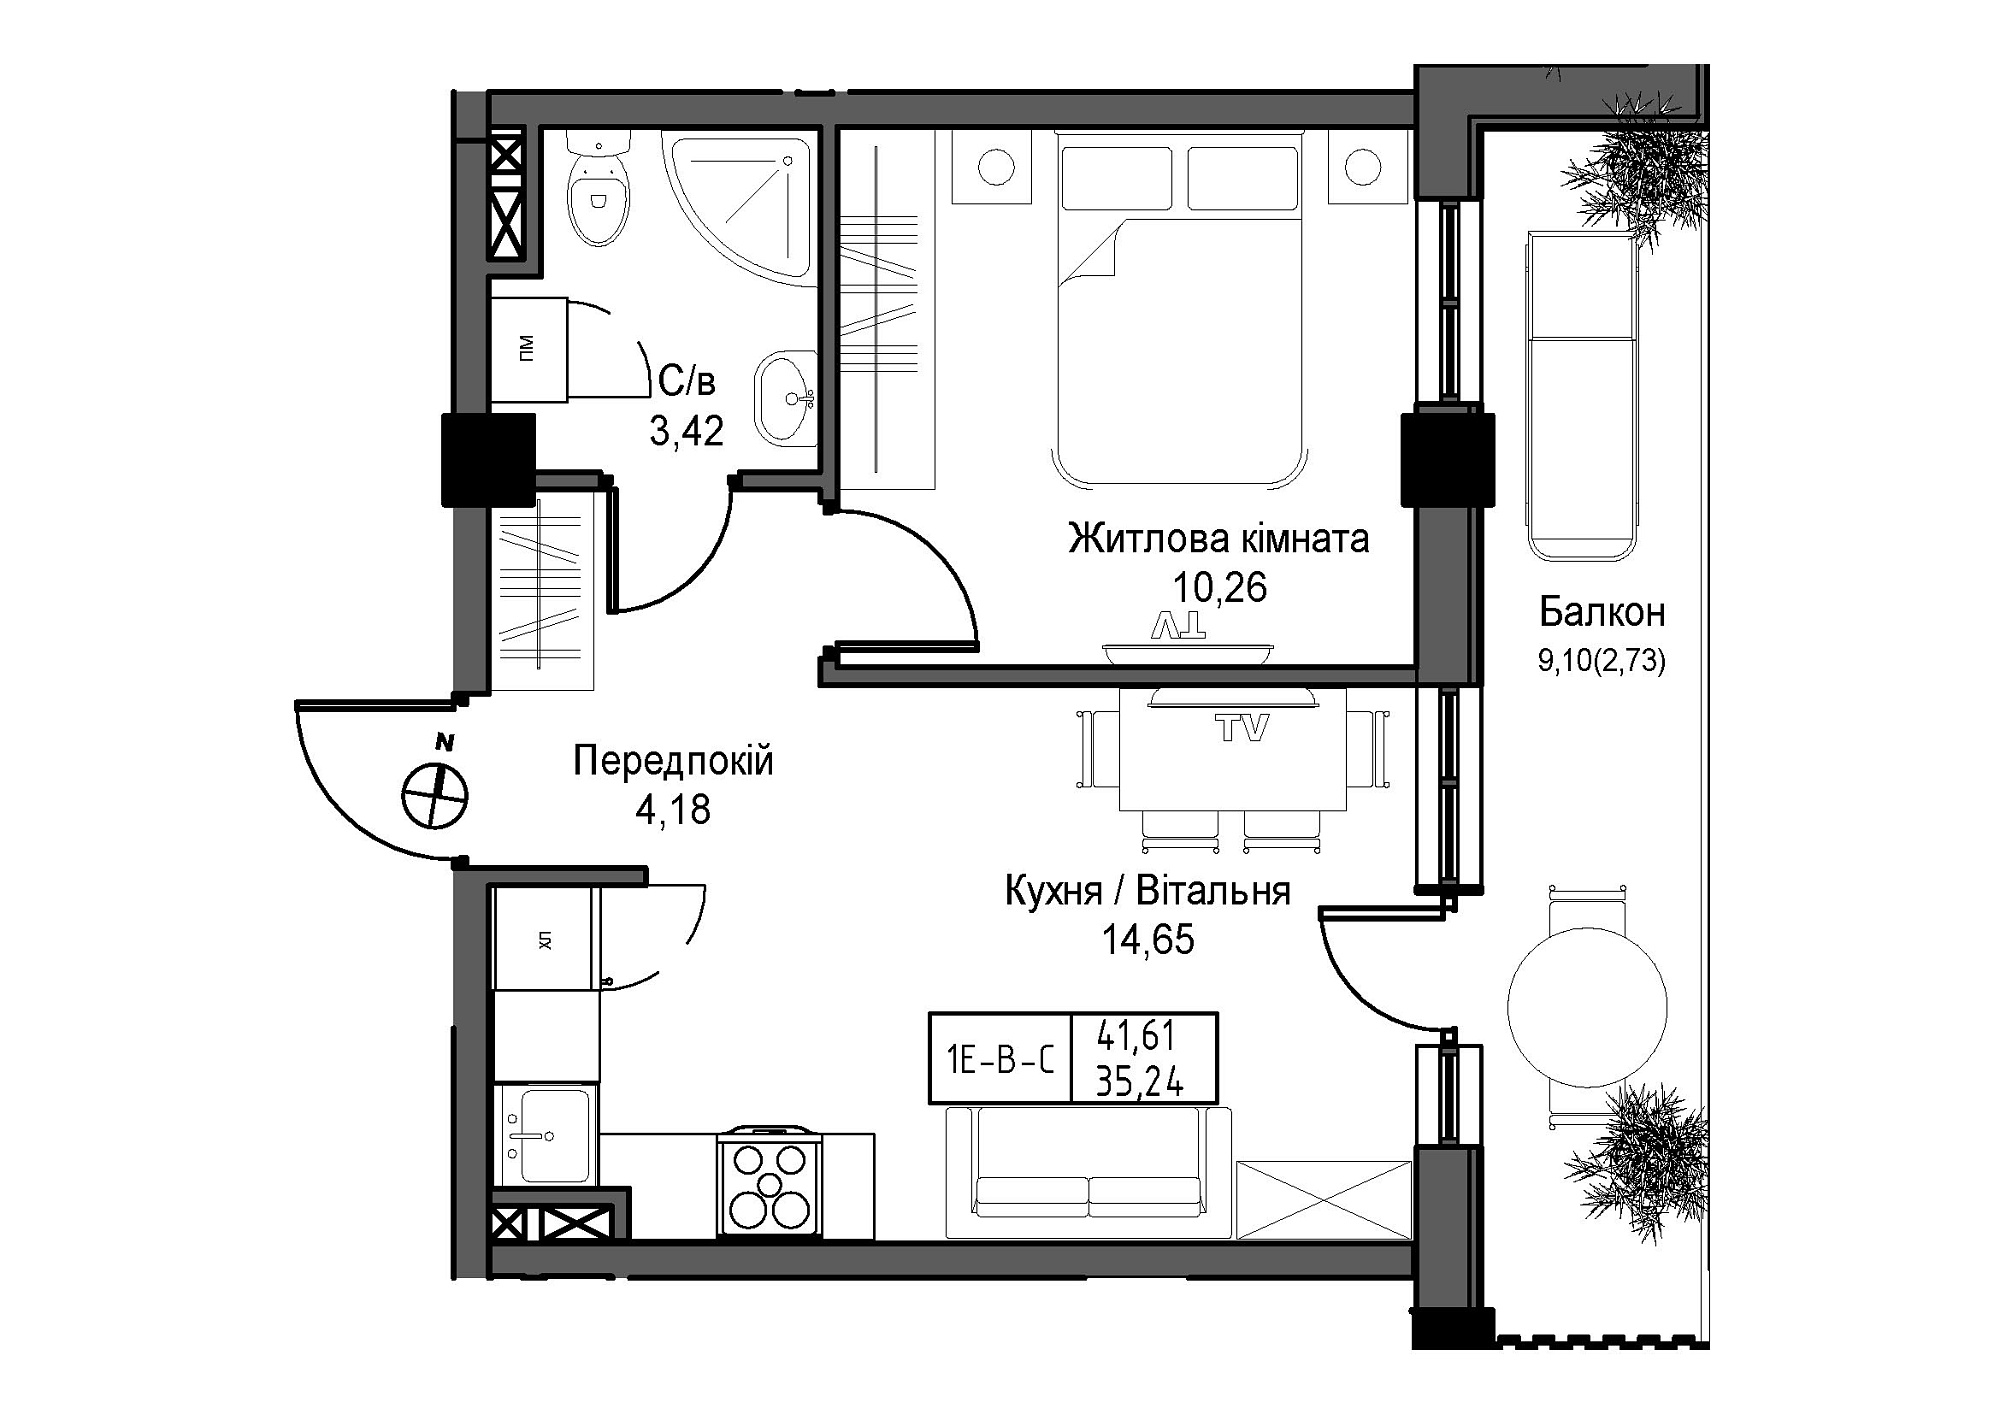 Планування 1-к квартира площею 35.24м2, UM-007-05/0004.